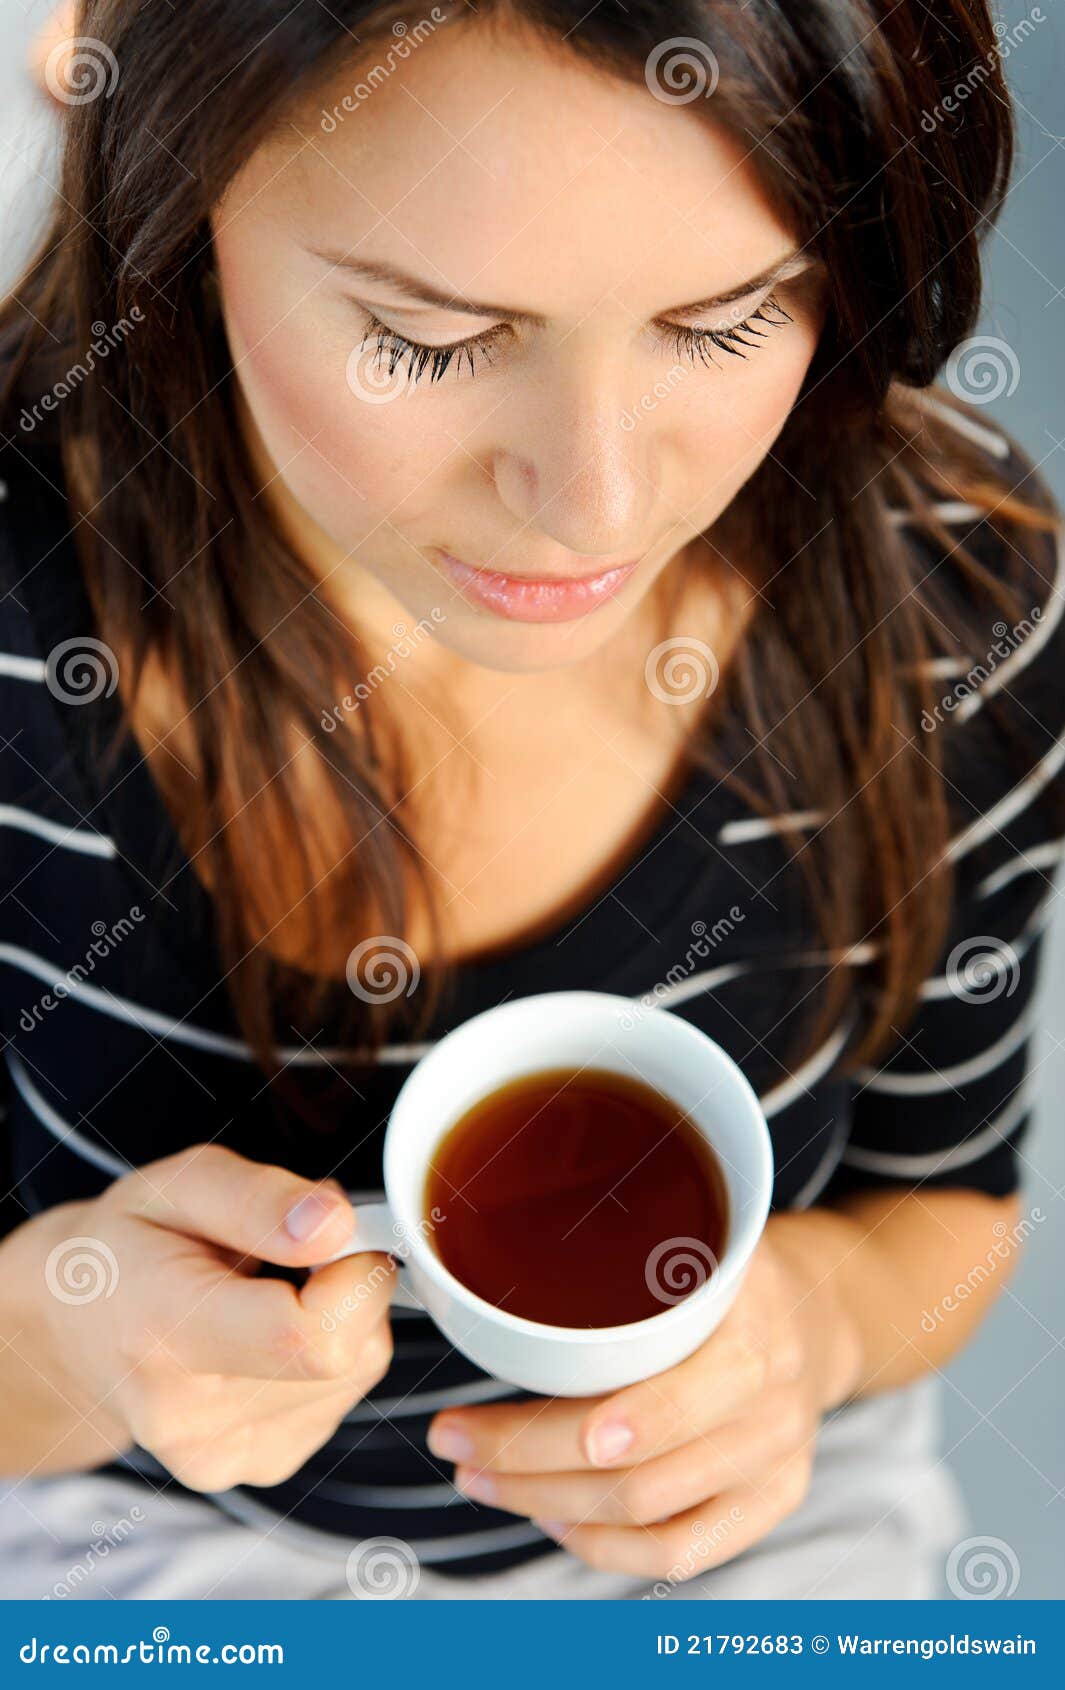 Enjoying her tea stock image. Image of brunette, attractive - 21792683